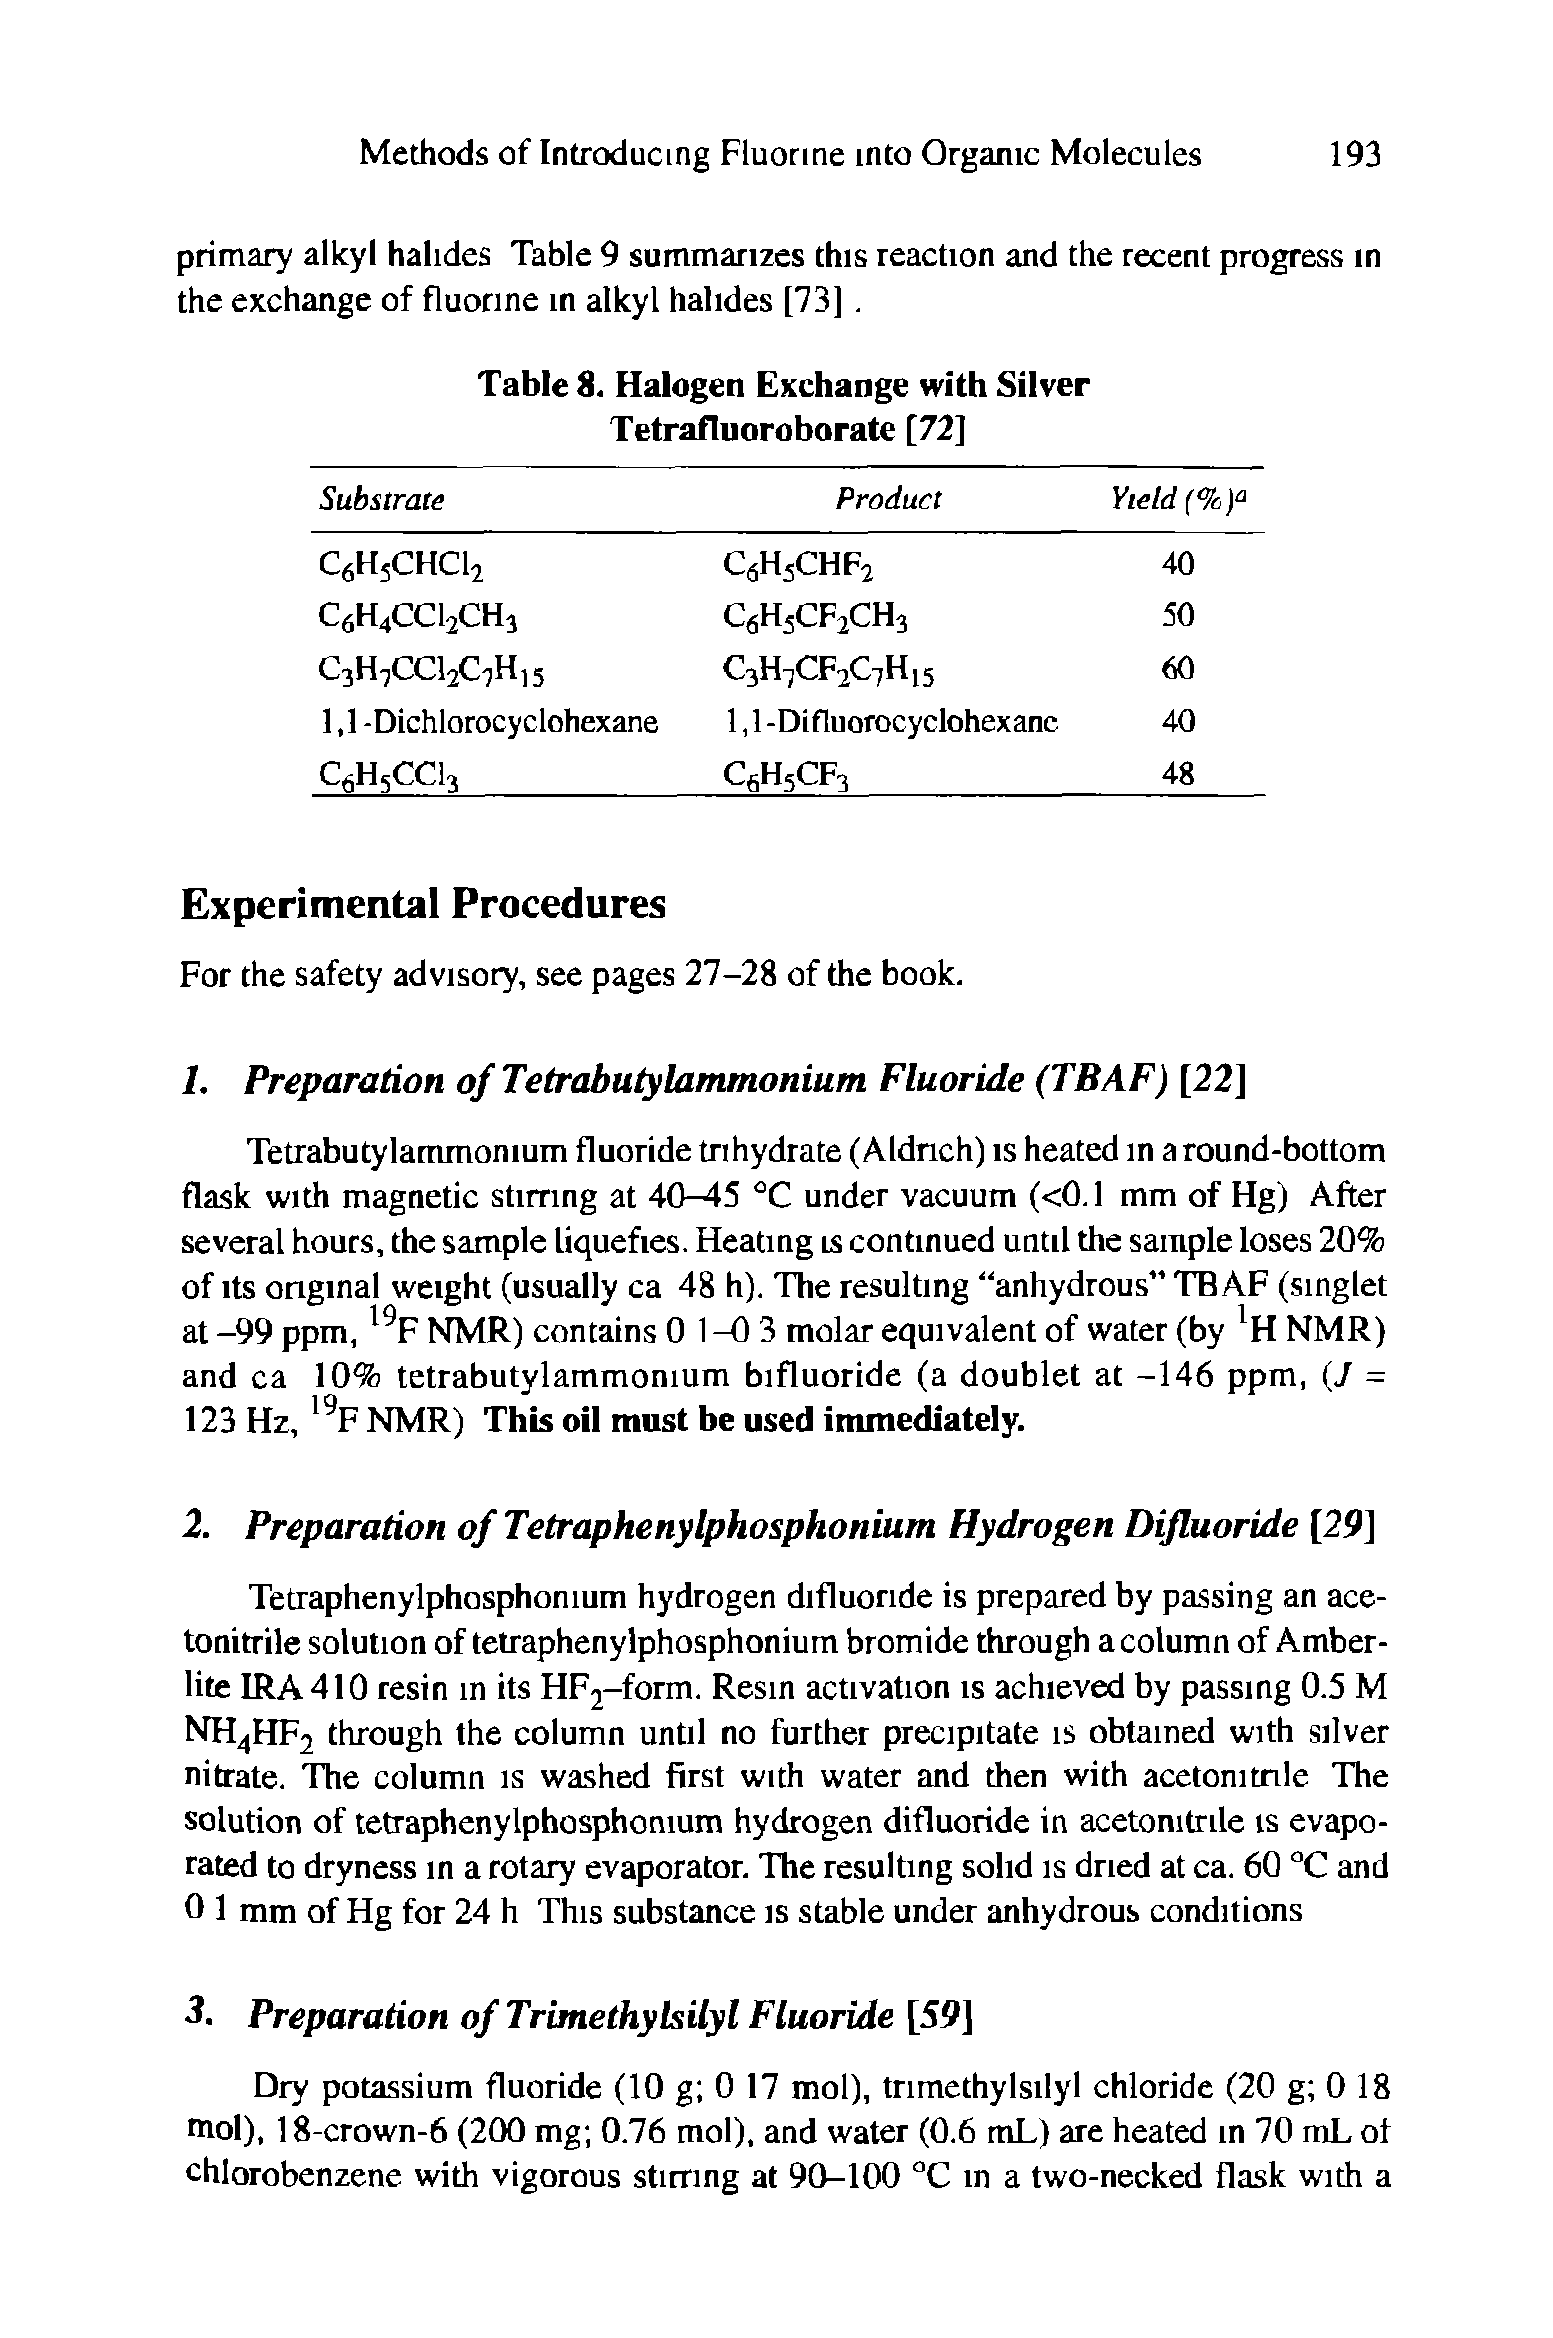 Table 8. Halogen Exchange with Silver Tetrafluoroborate [72]...